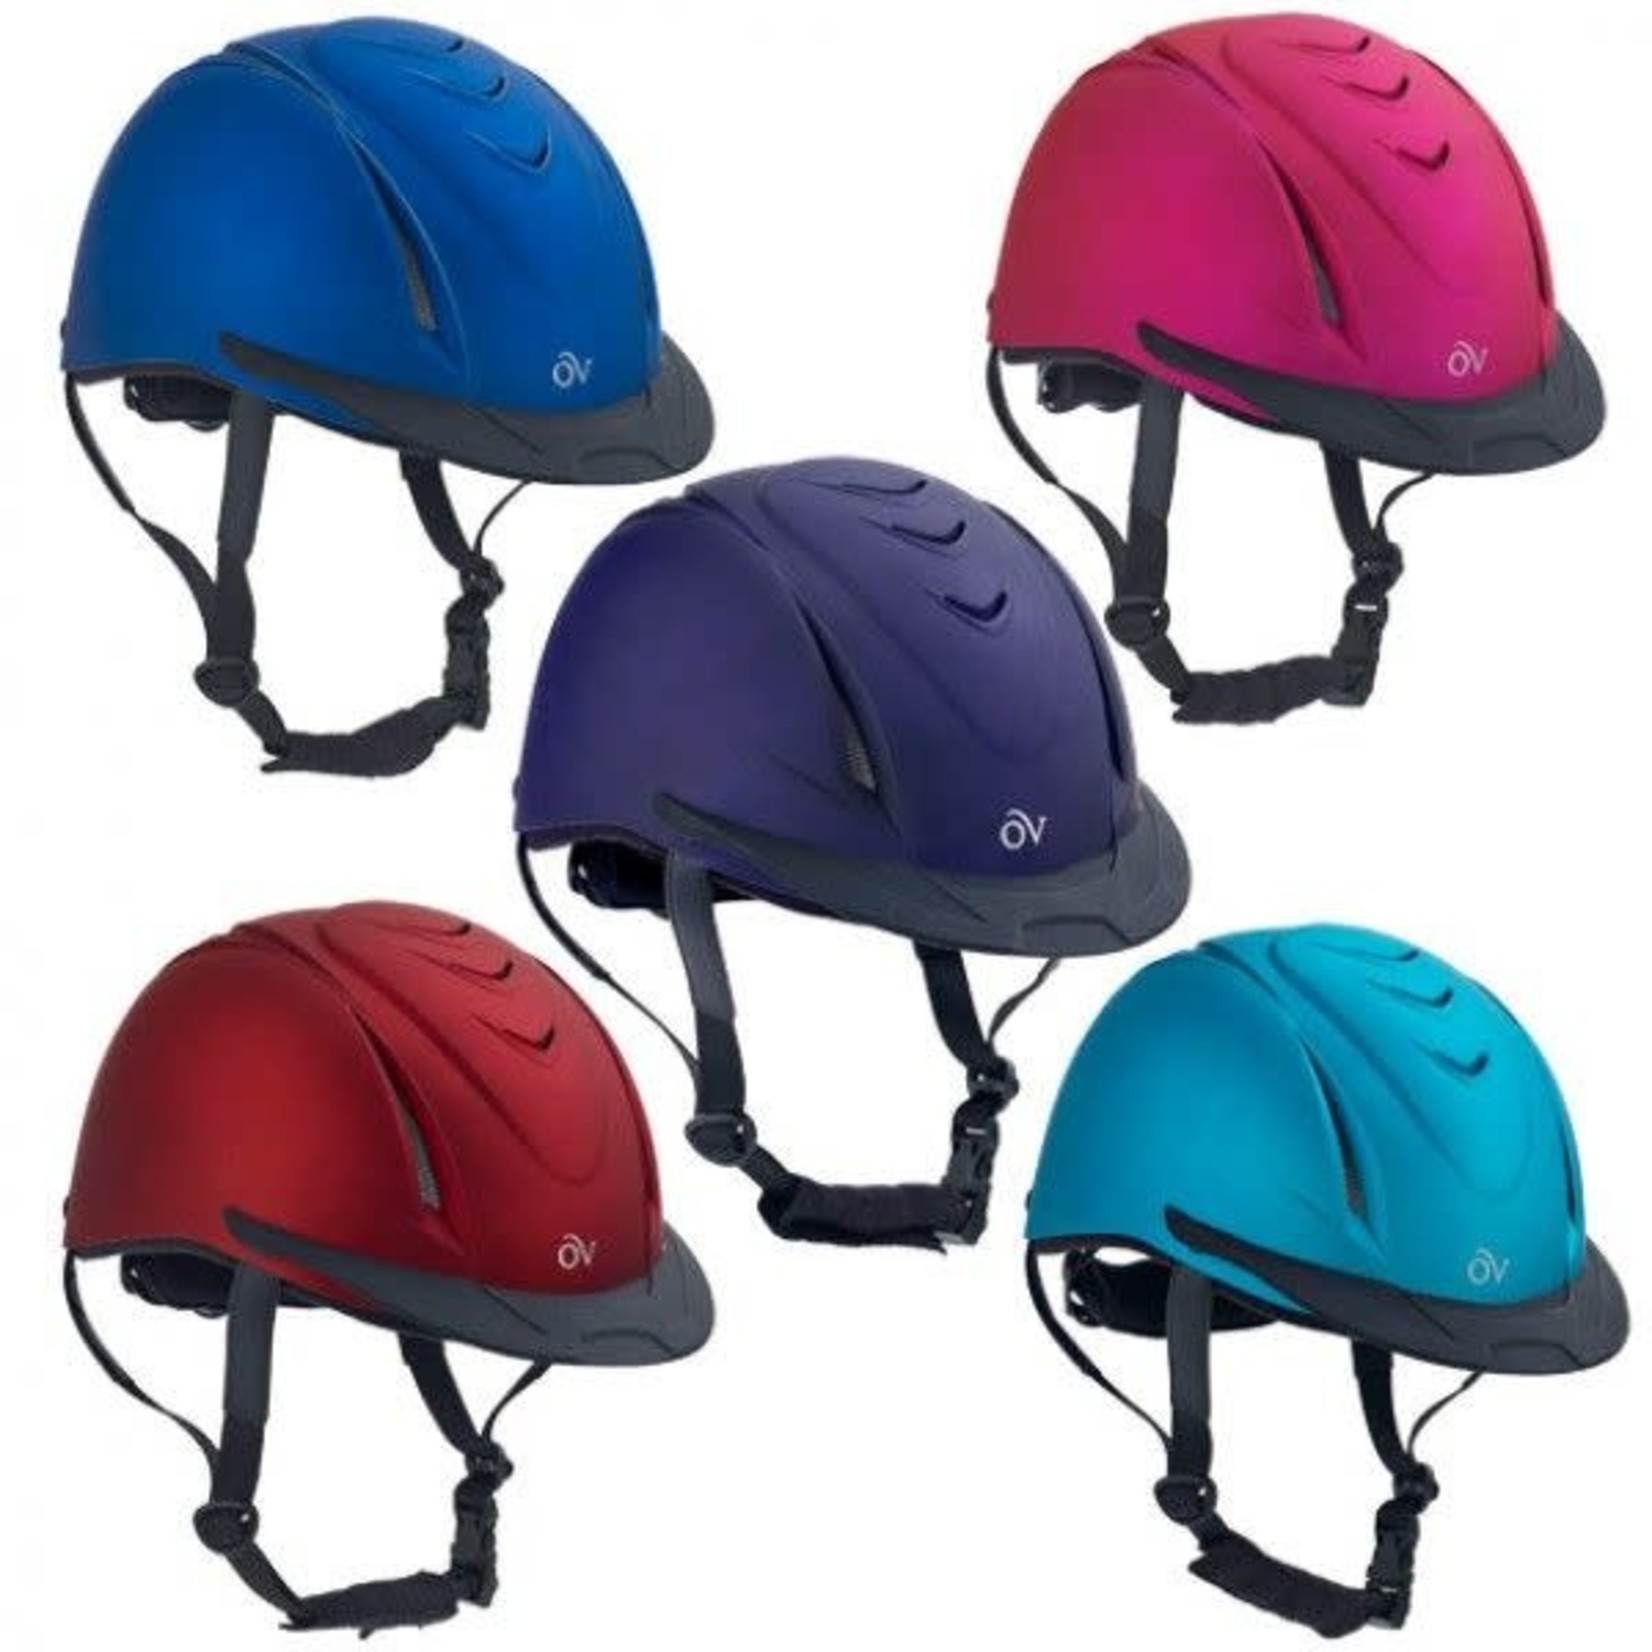 Ovation Ovation DLX Schooler Metallic Helmet